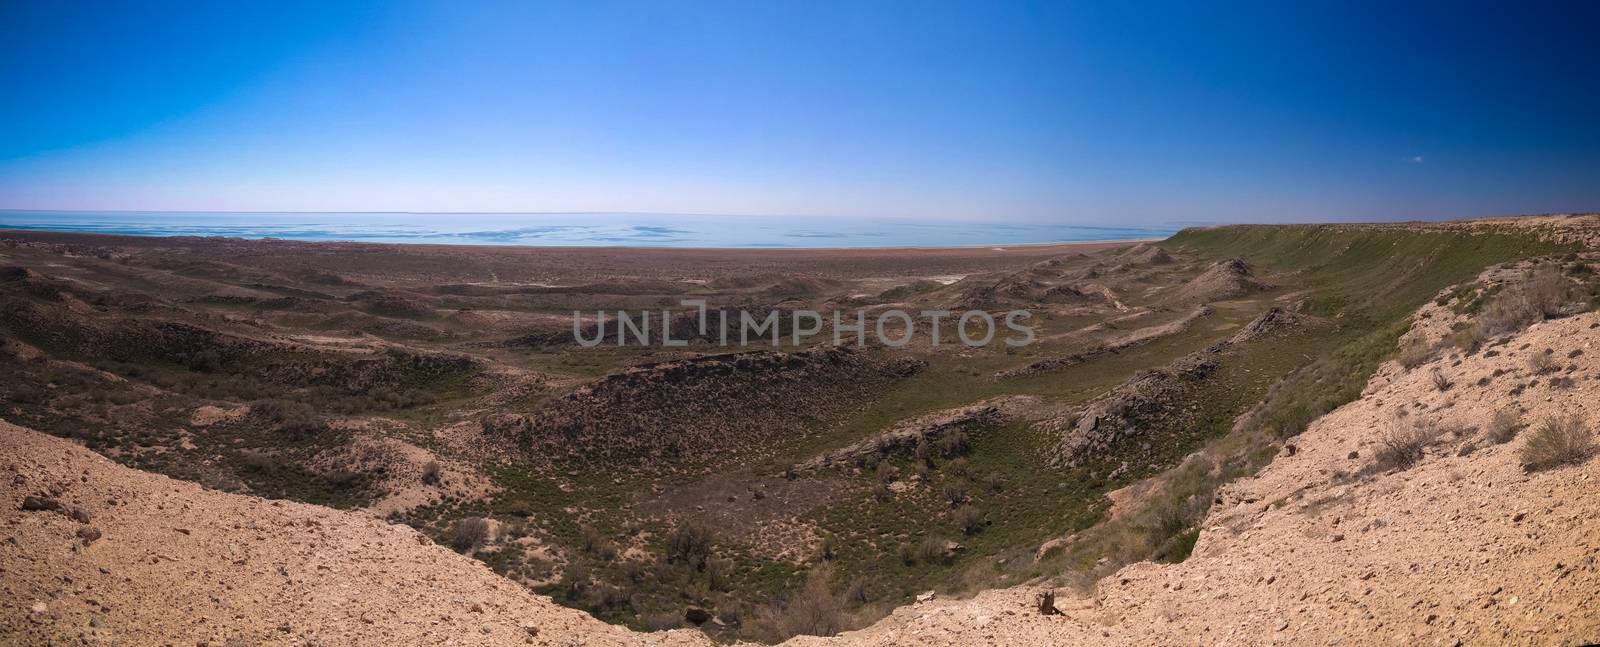 Panorama view to Aral sea from the rim of Plateau Ustyurt near Duana cape , Karakalpakstan, Uzbekistan by homocosmicos